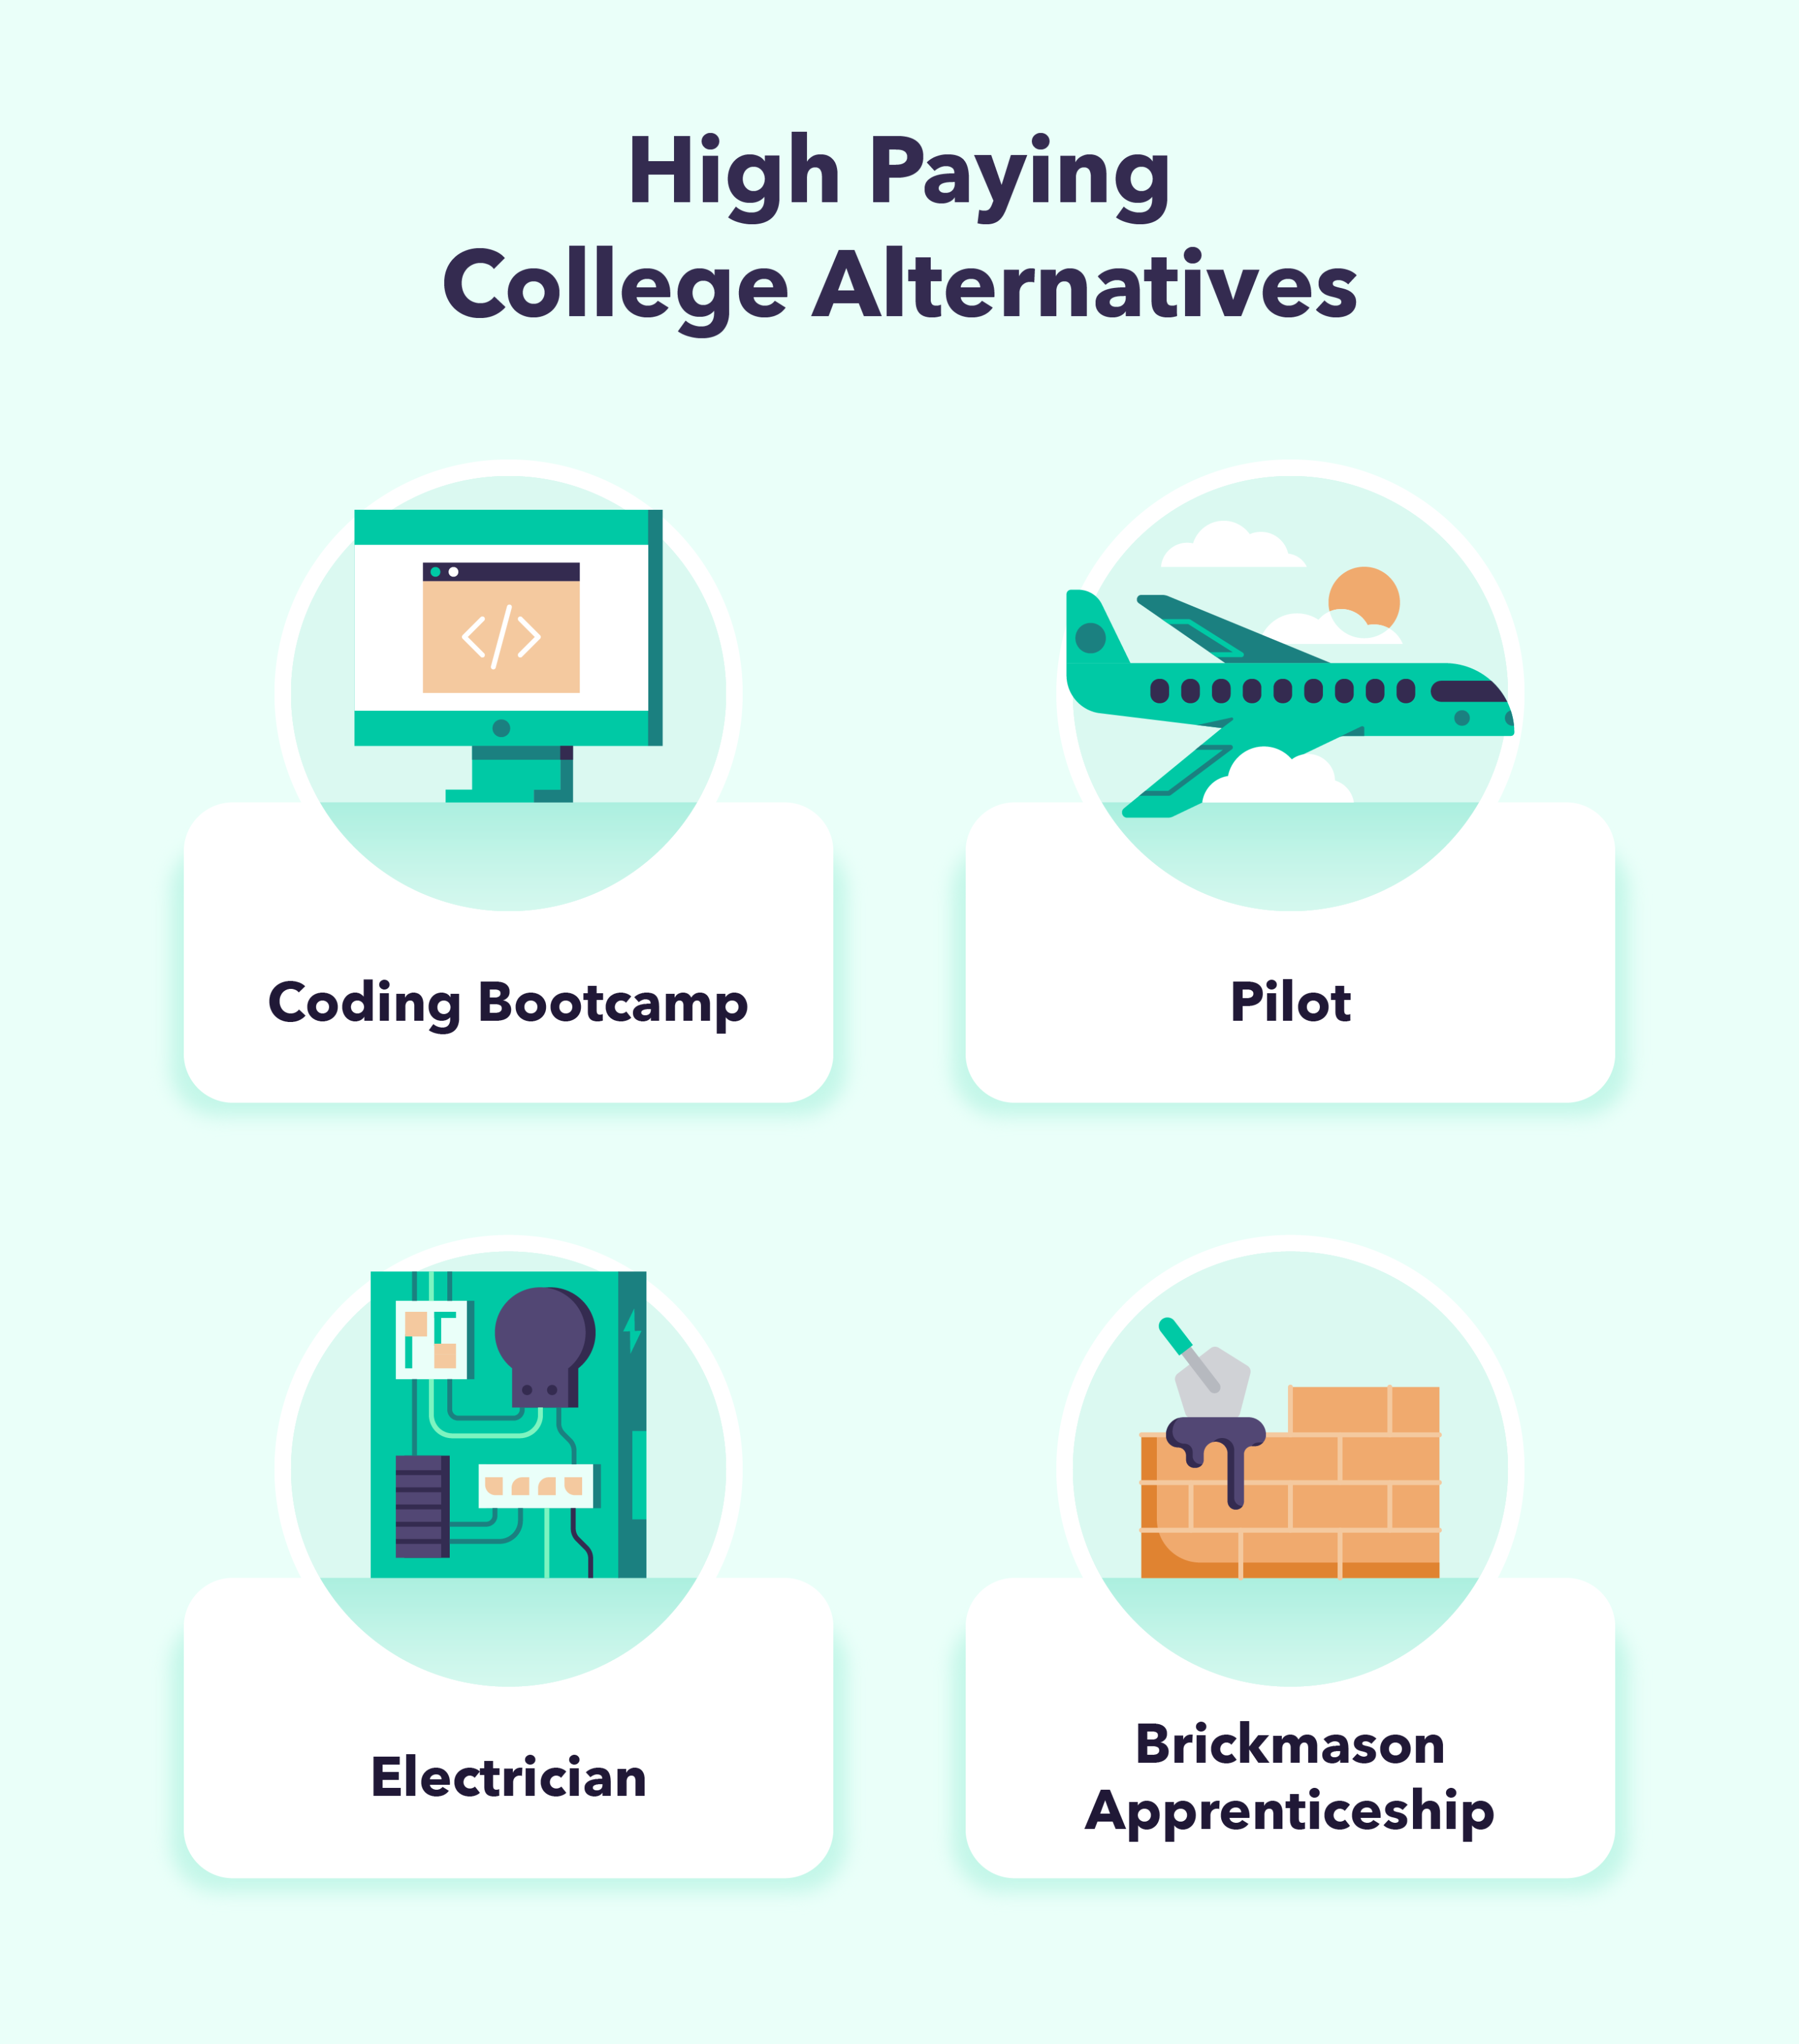 High paying college alternatives: coder, pilot, electrician, or brickmason.